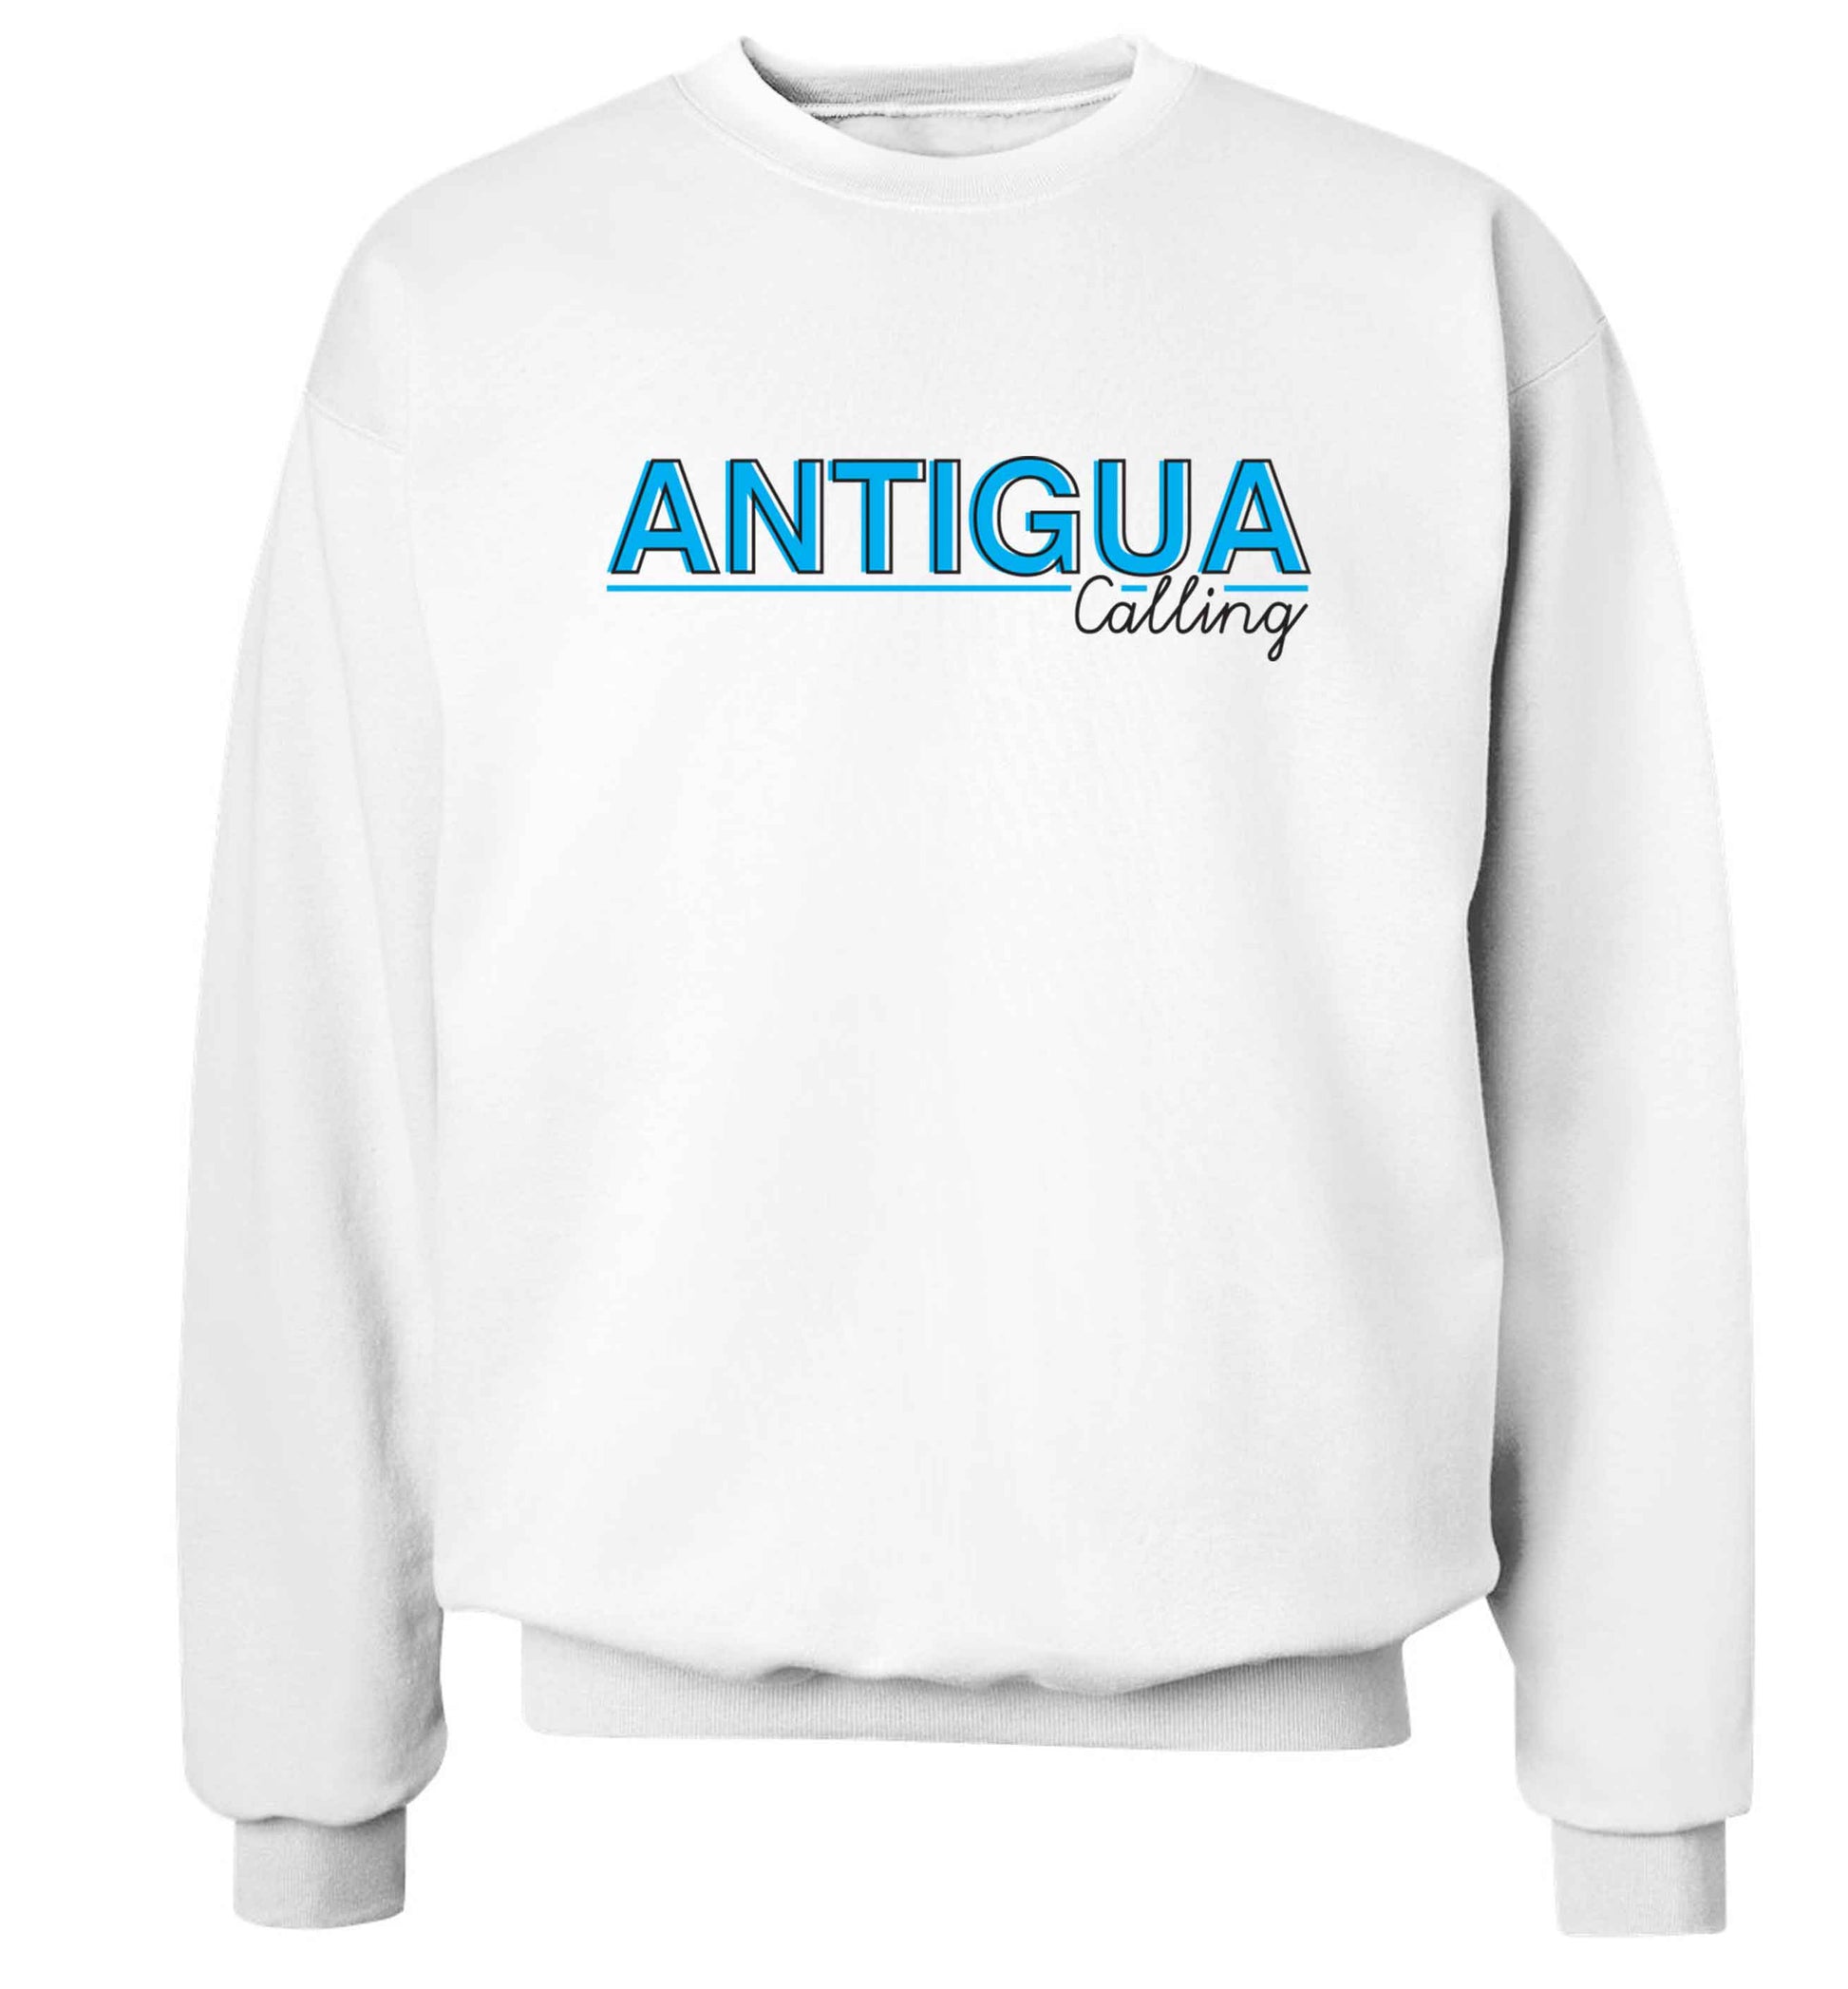 Antigua calling Adult's unisex white Sweater 2XL